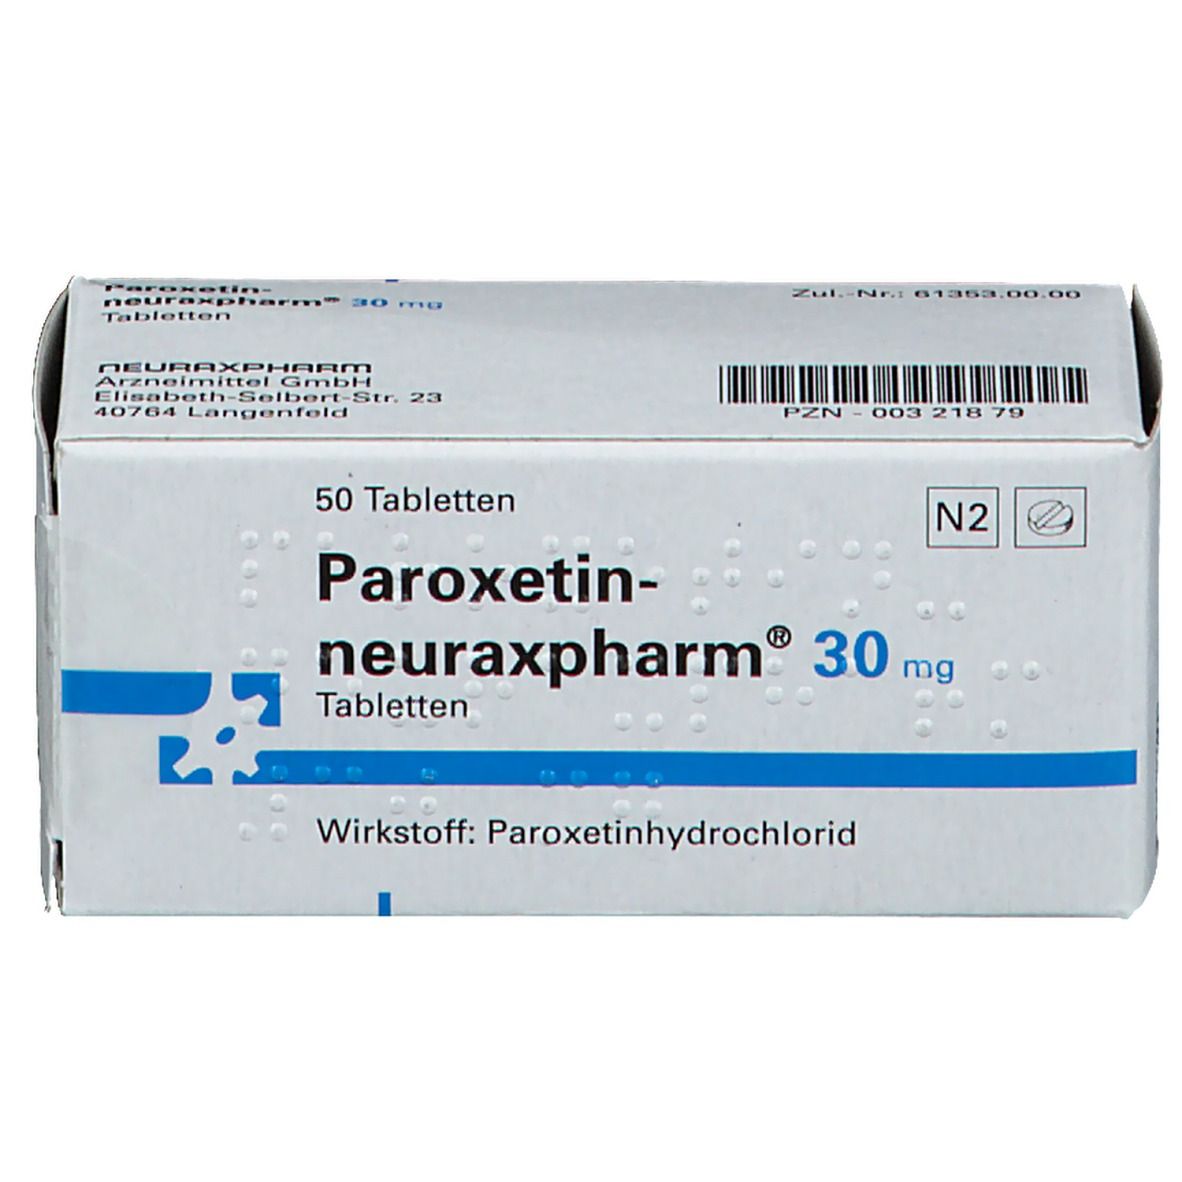 Paroxetin-neuraxpharm® 30 mg